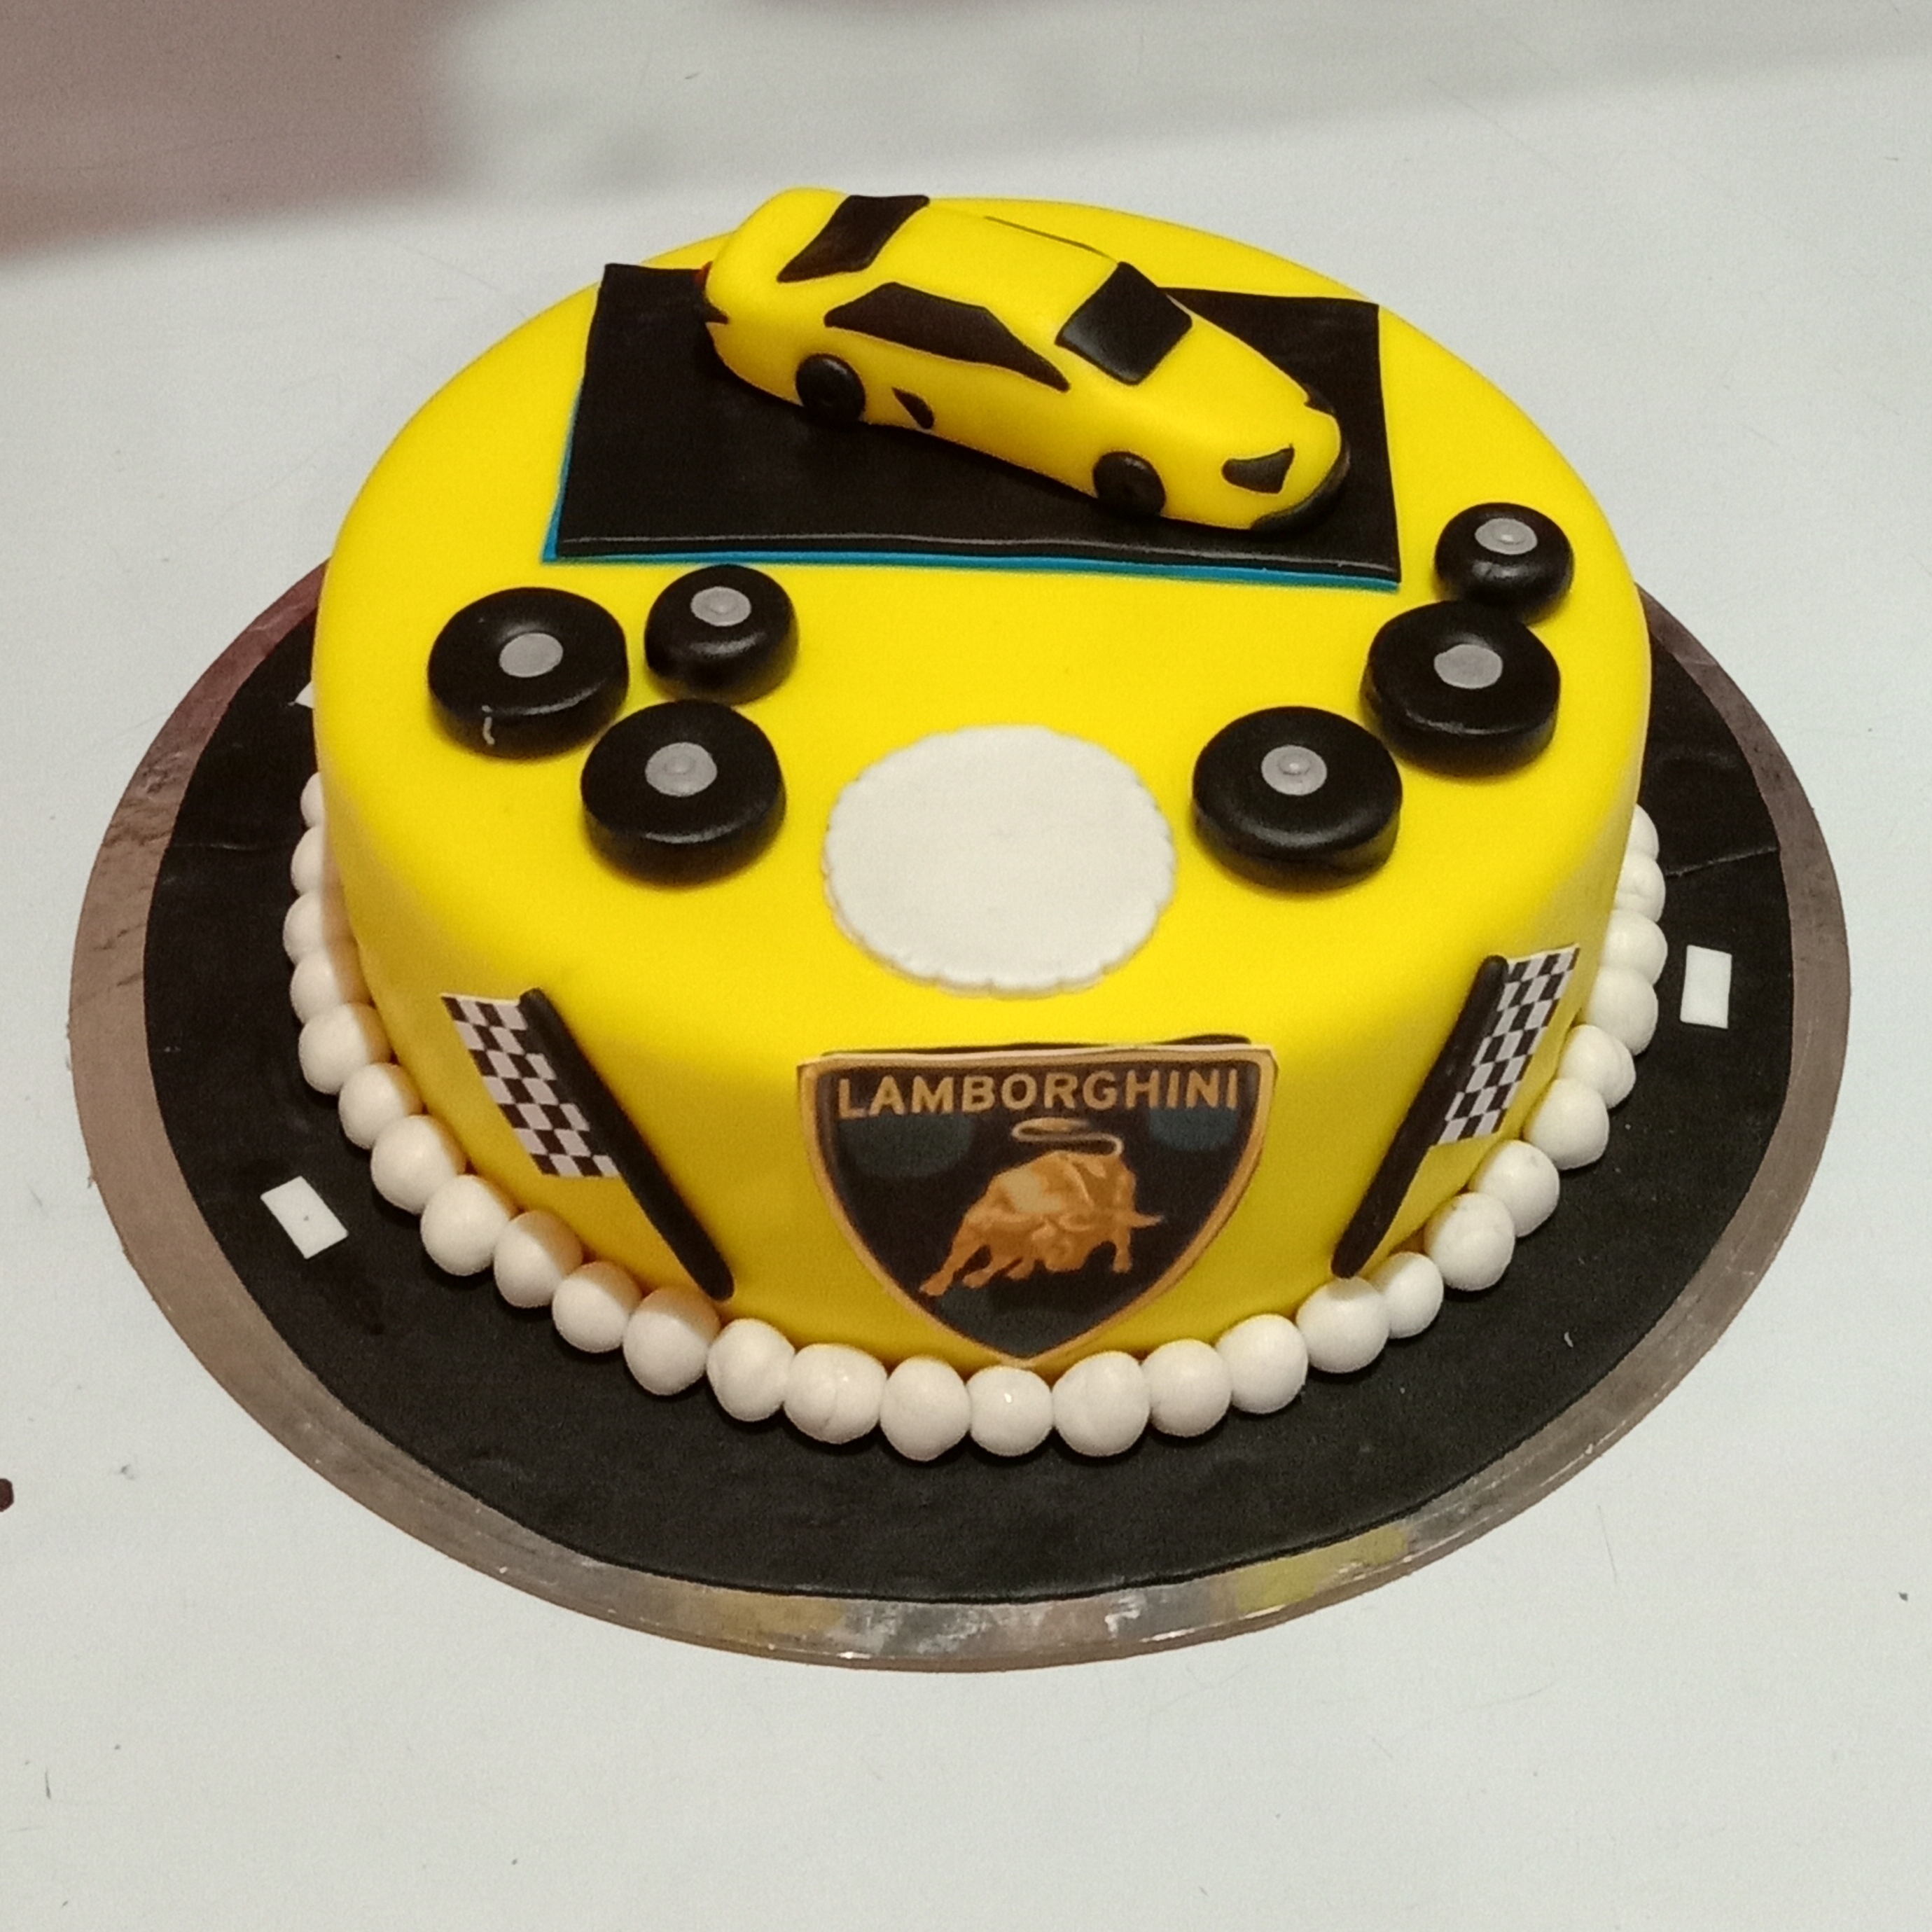 Cake with car decorations stock photo. Image of shape - 25926436